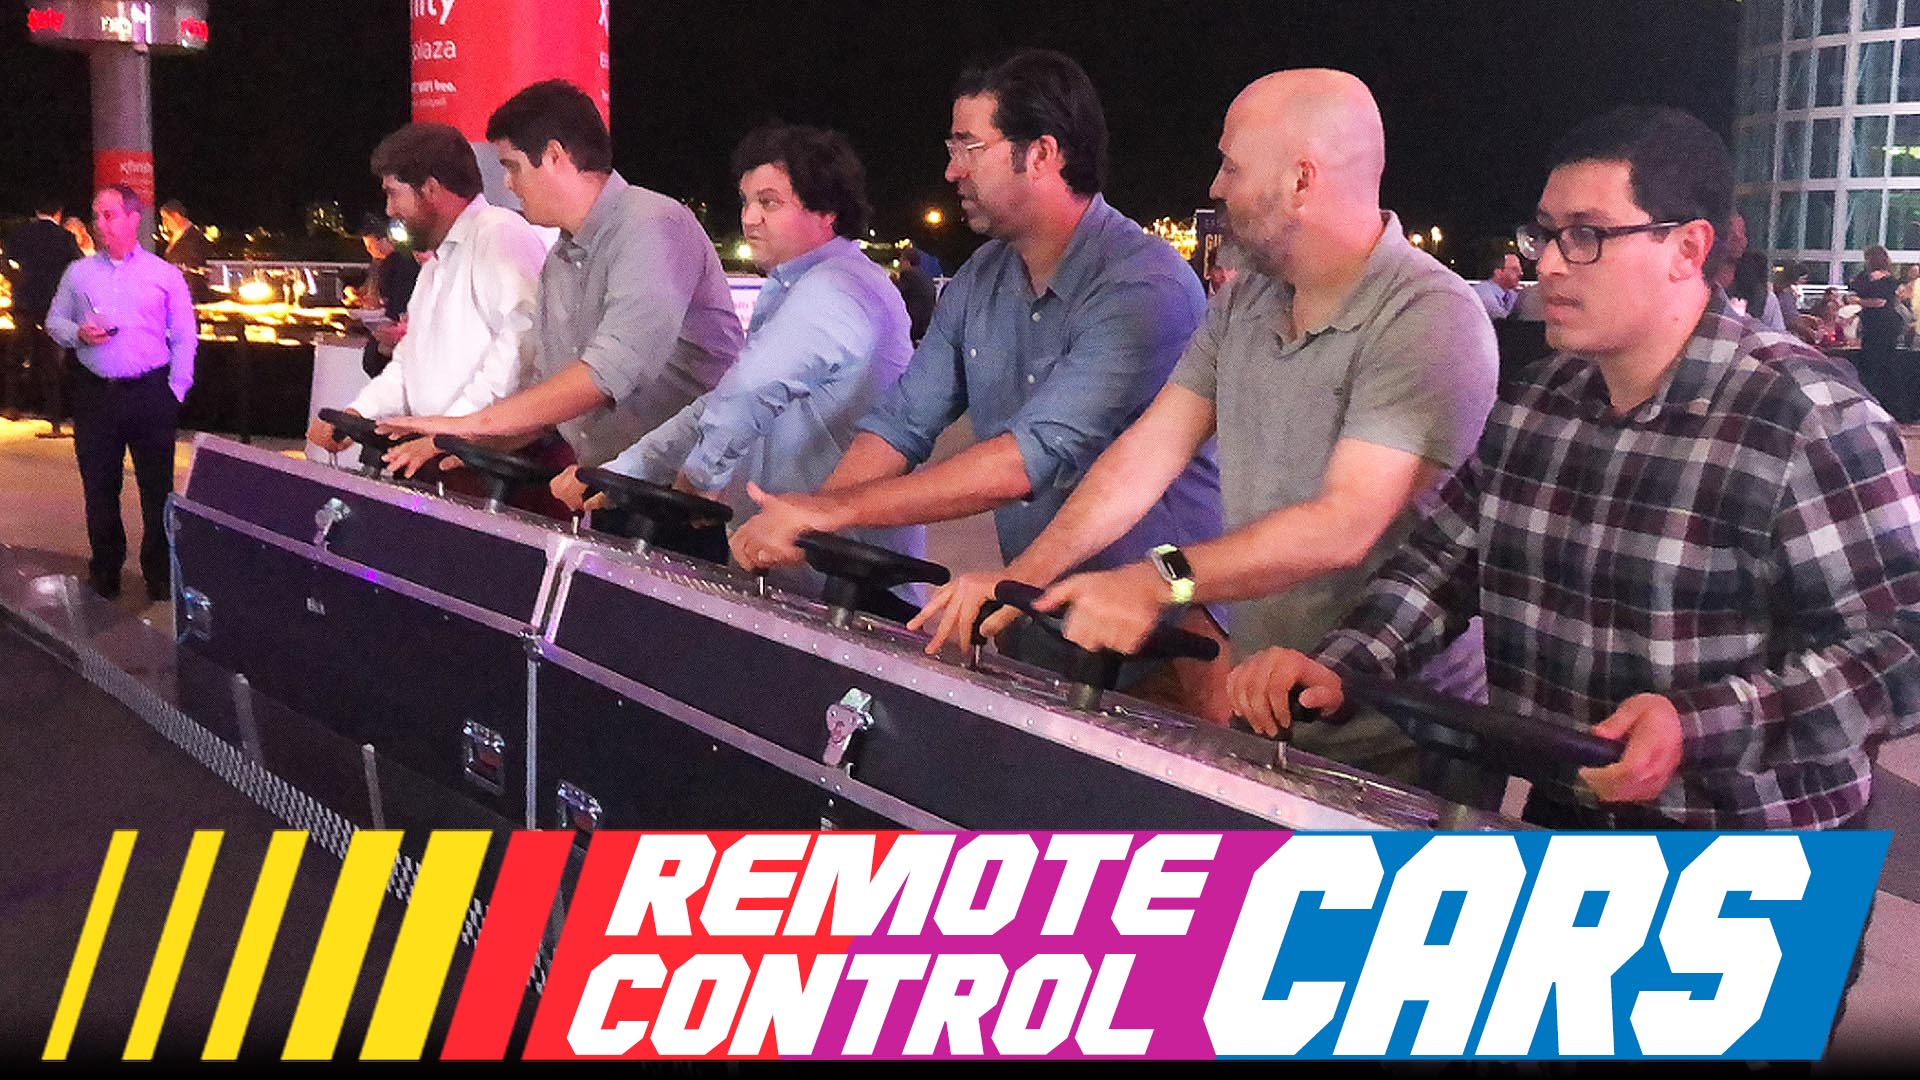 remote control rc cars rental in orlando florida